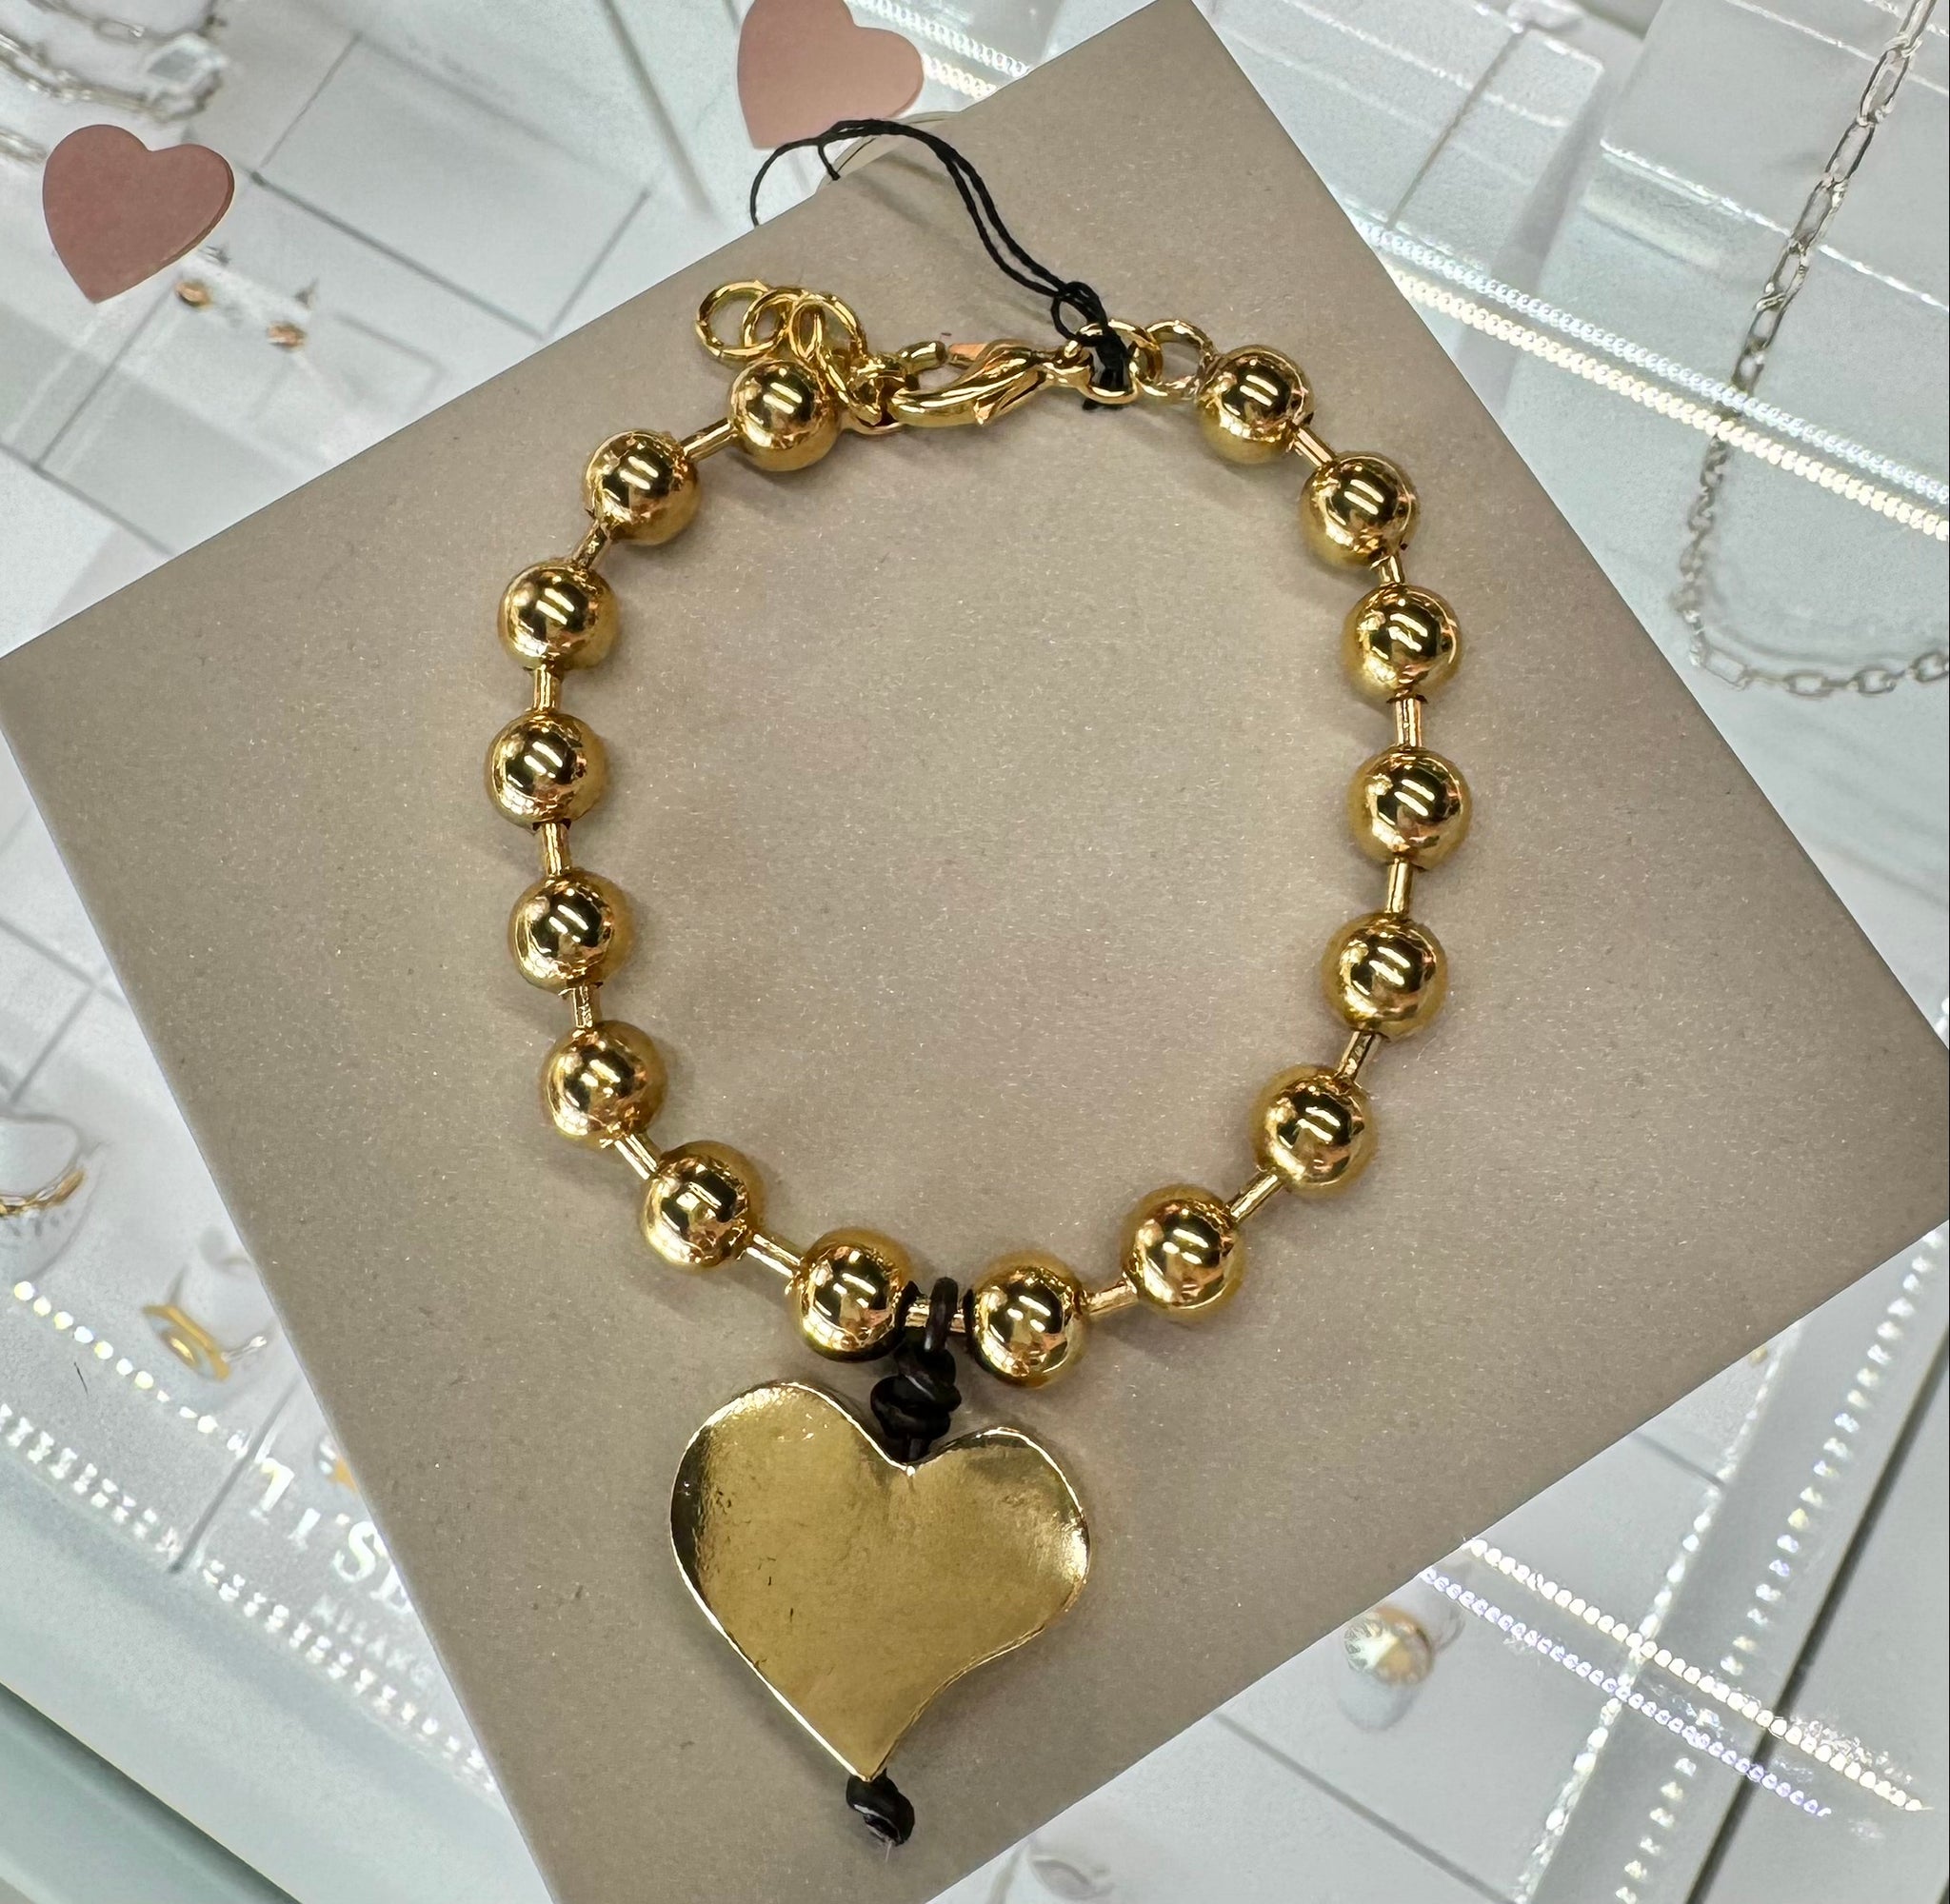 Tucco Heart Ball Chain Bracelet